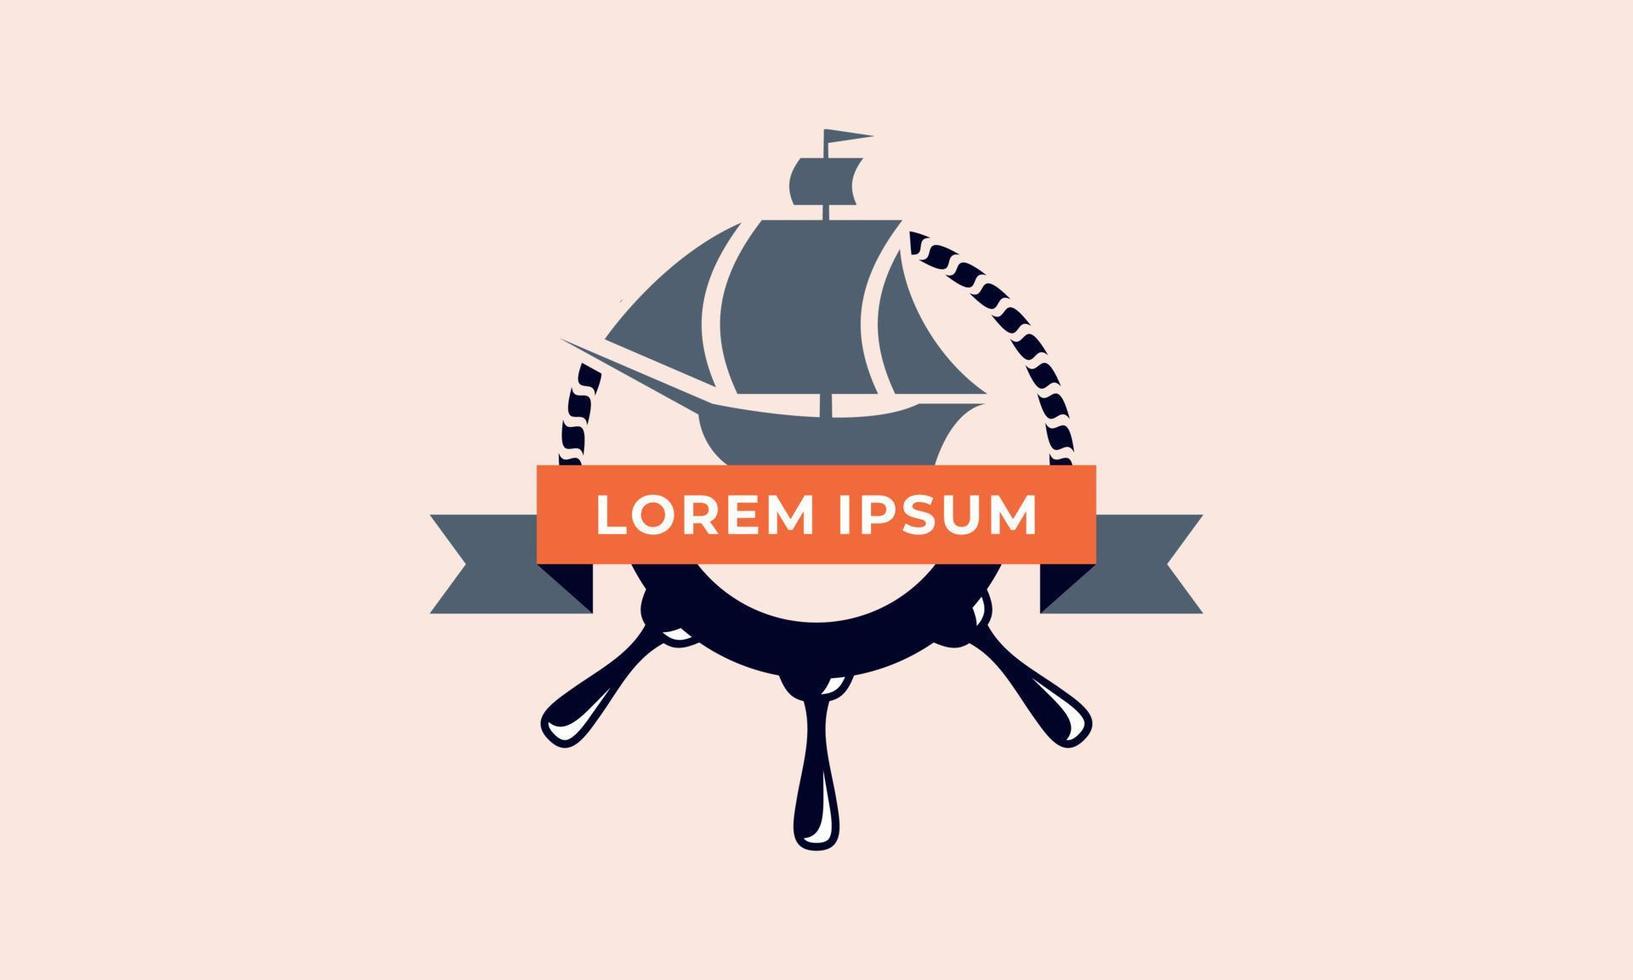 Adventure boat, sailboat and boat trip logo design vector template